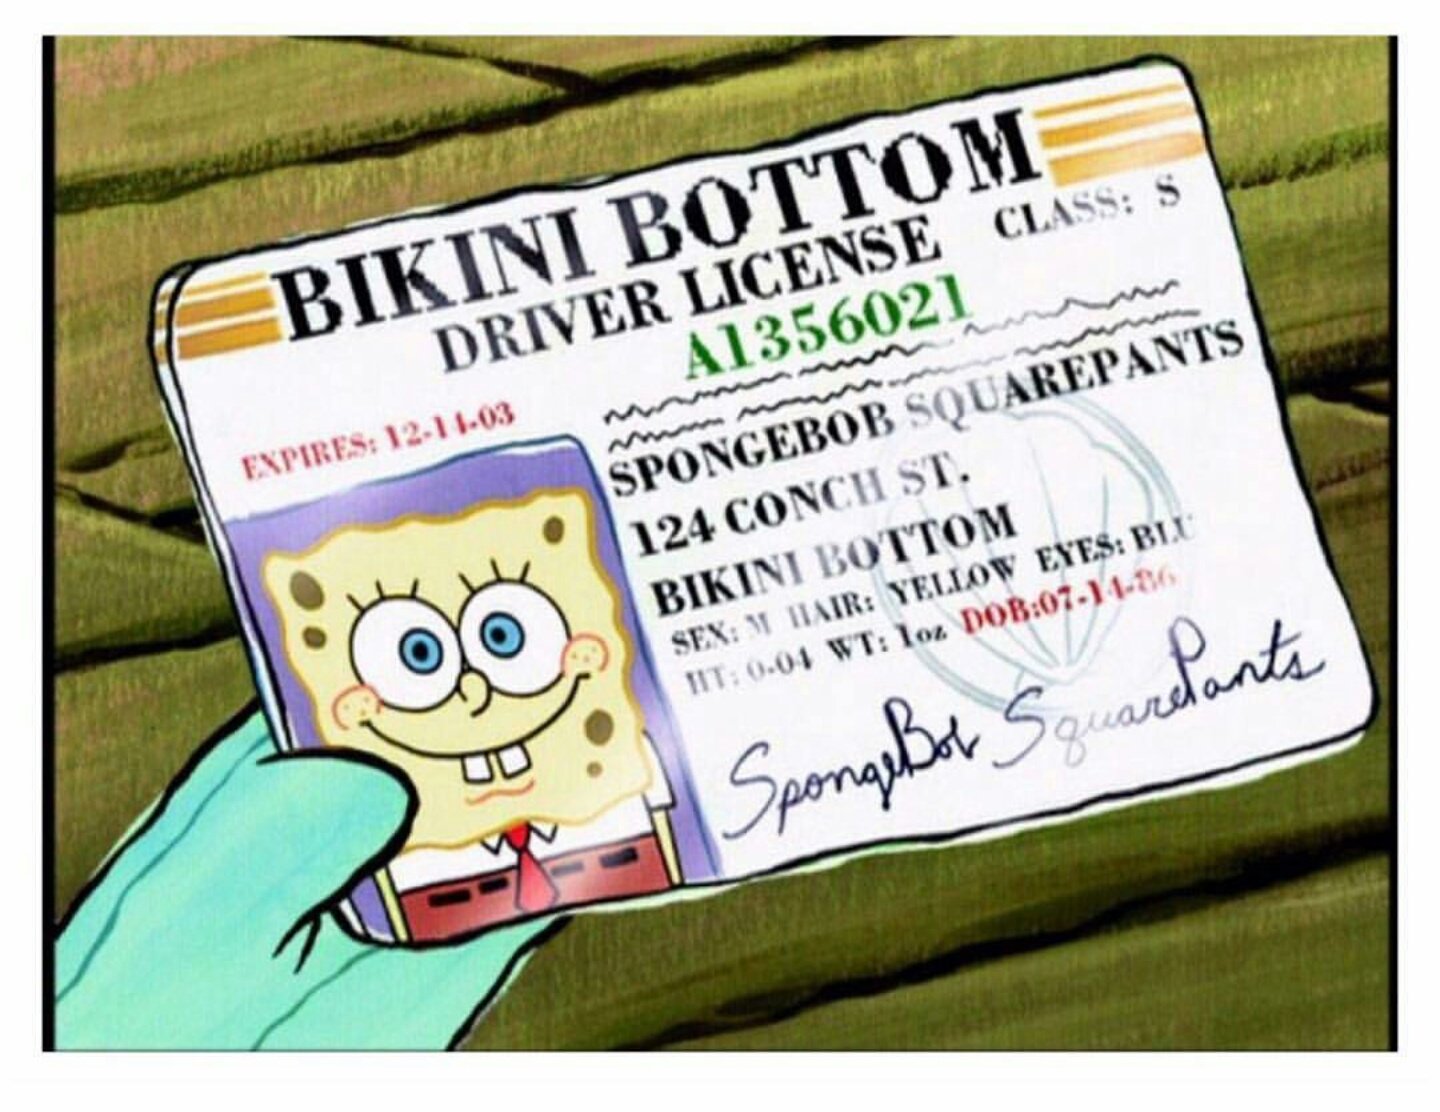 I just want to wish Spongebob Squarepants a very happy birthday  